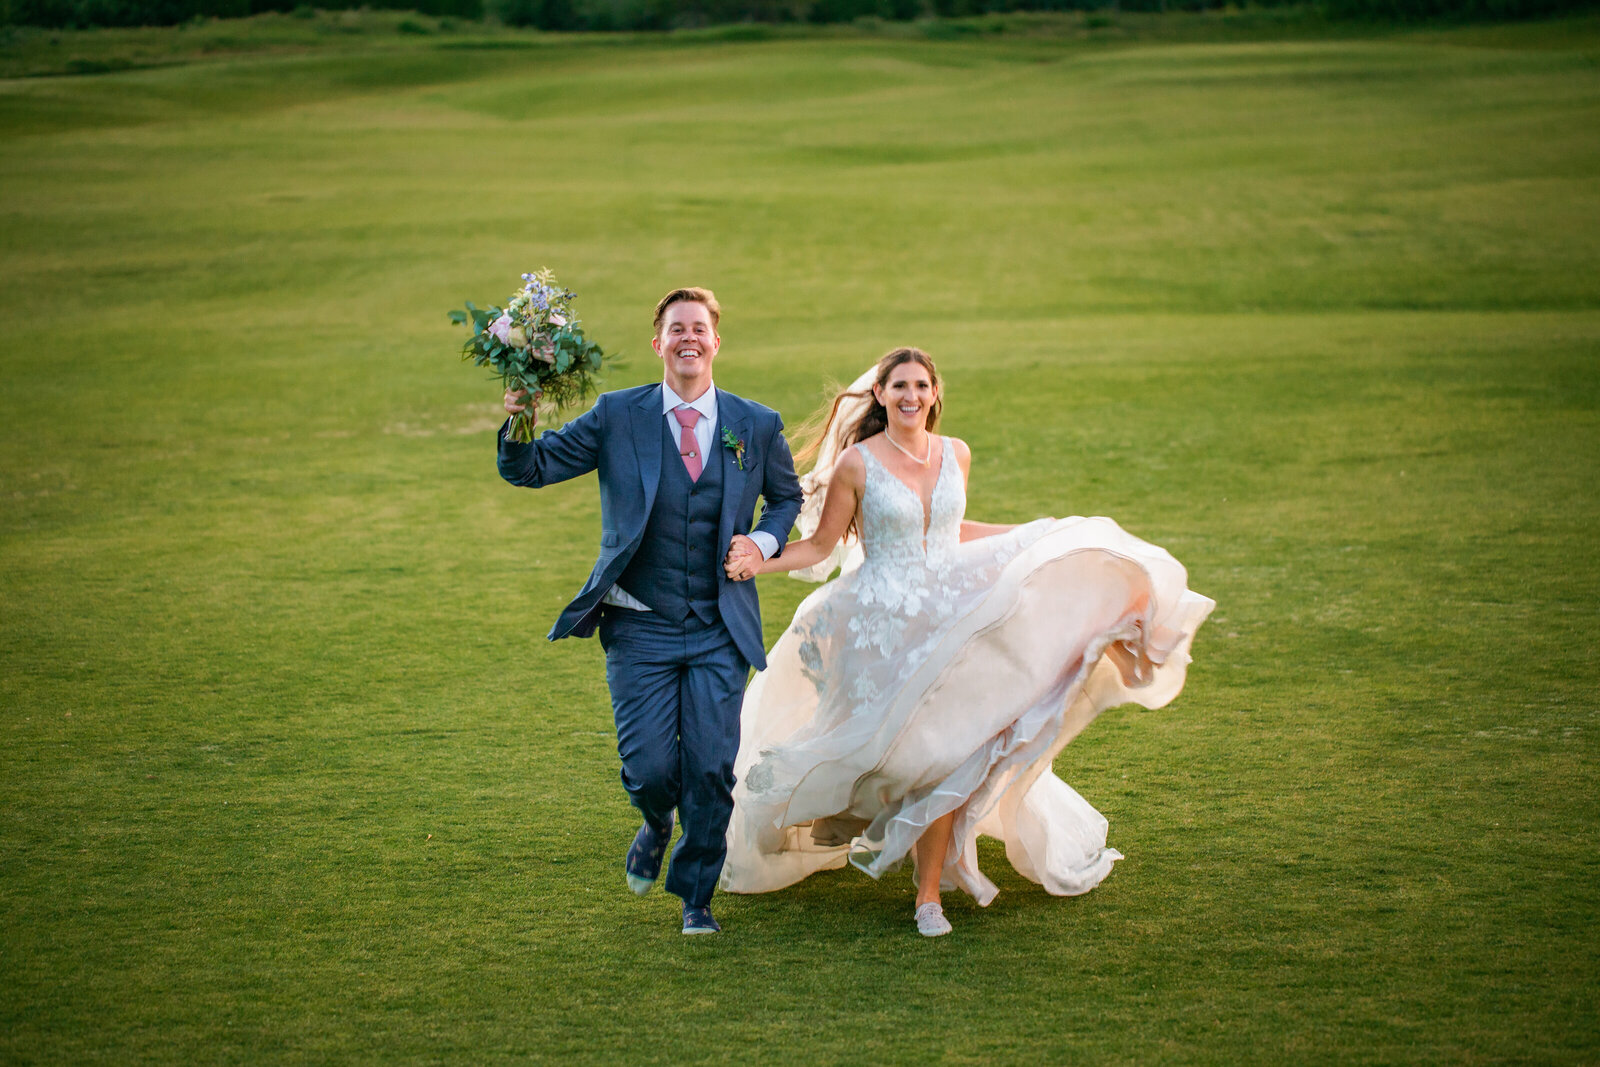 Jackson Hole photographers capture couple running away together after Grand teton wedding